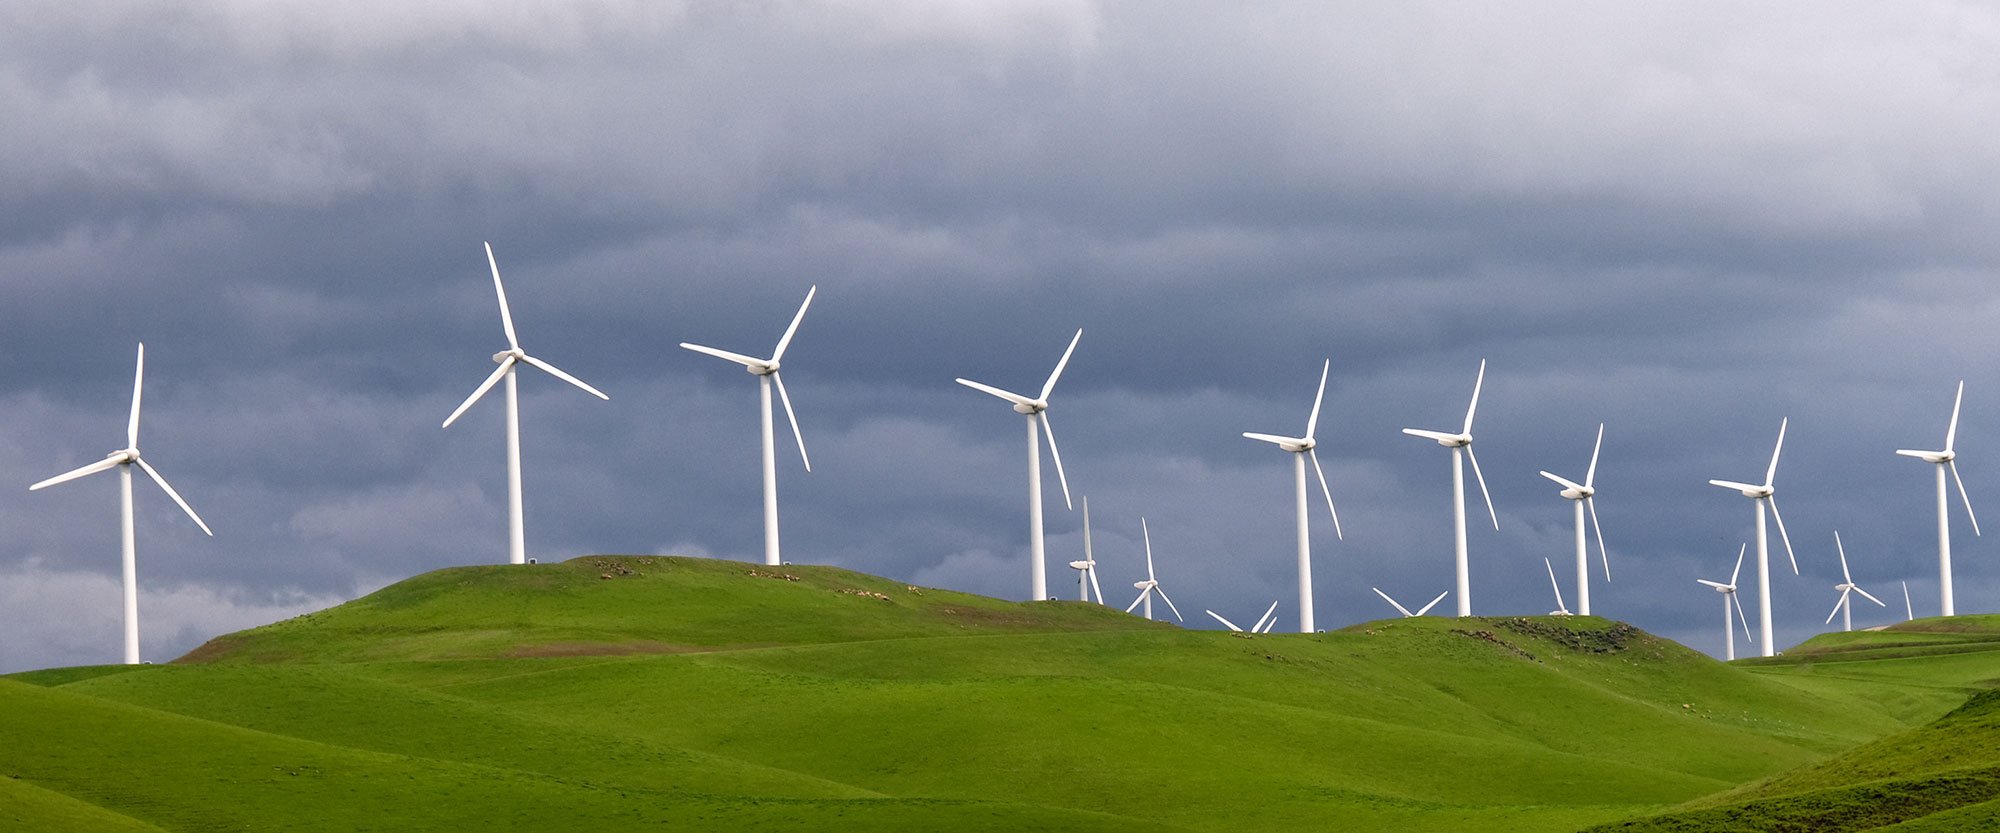 Wind turbines on a hillside in California